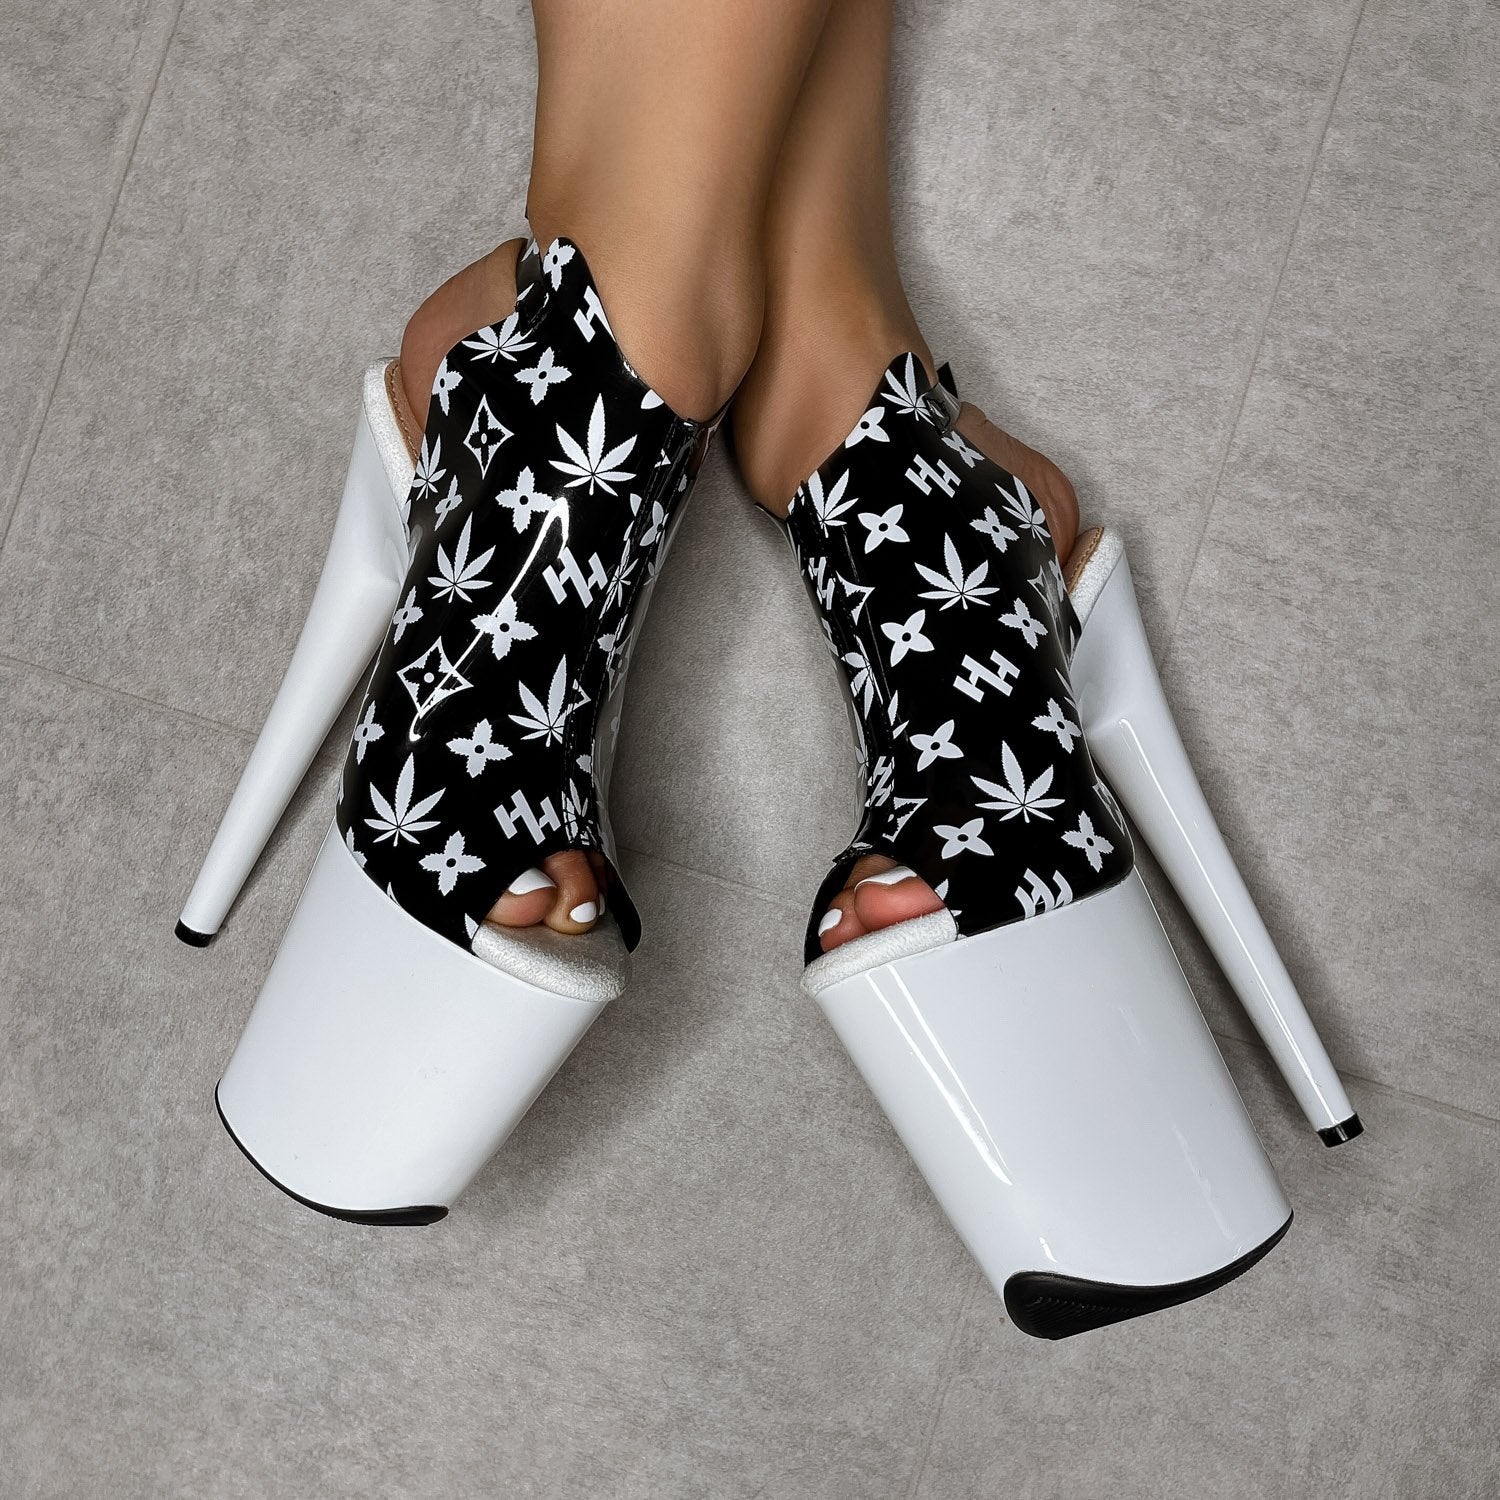 Branded Shield Stiletto - Black/White - 8 INCH, stripper shoe, stripper heel, pole heel, not a pleaser, platform, dancer, pole dance, floor work